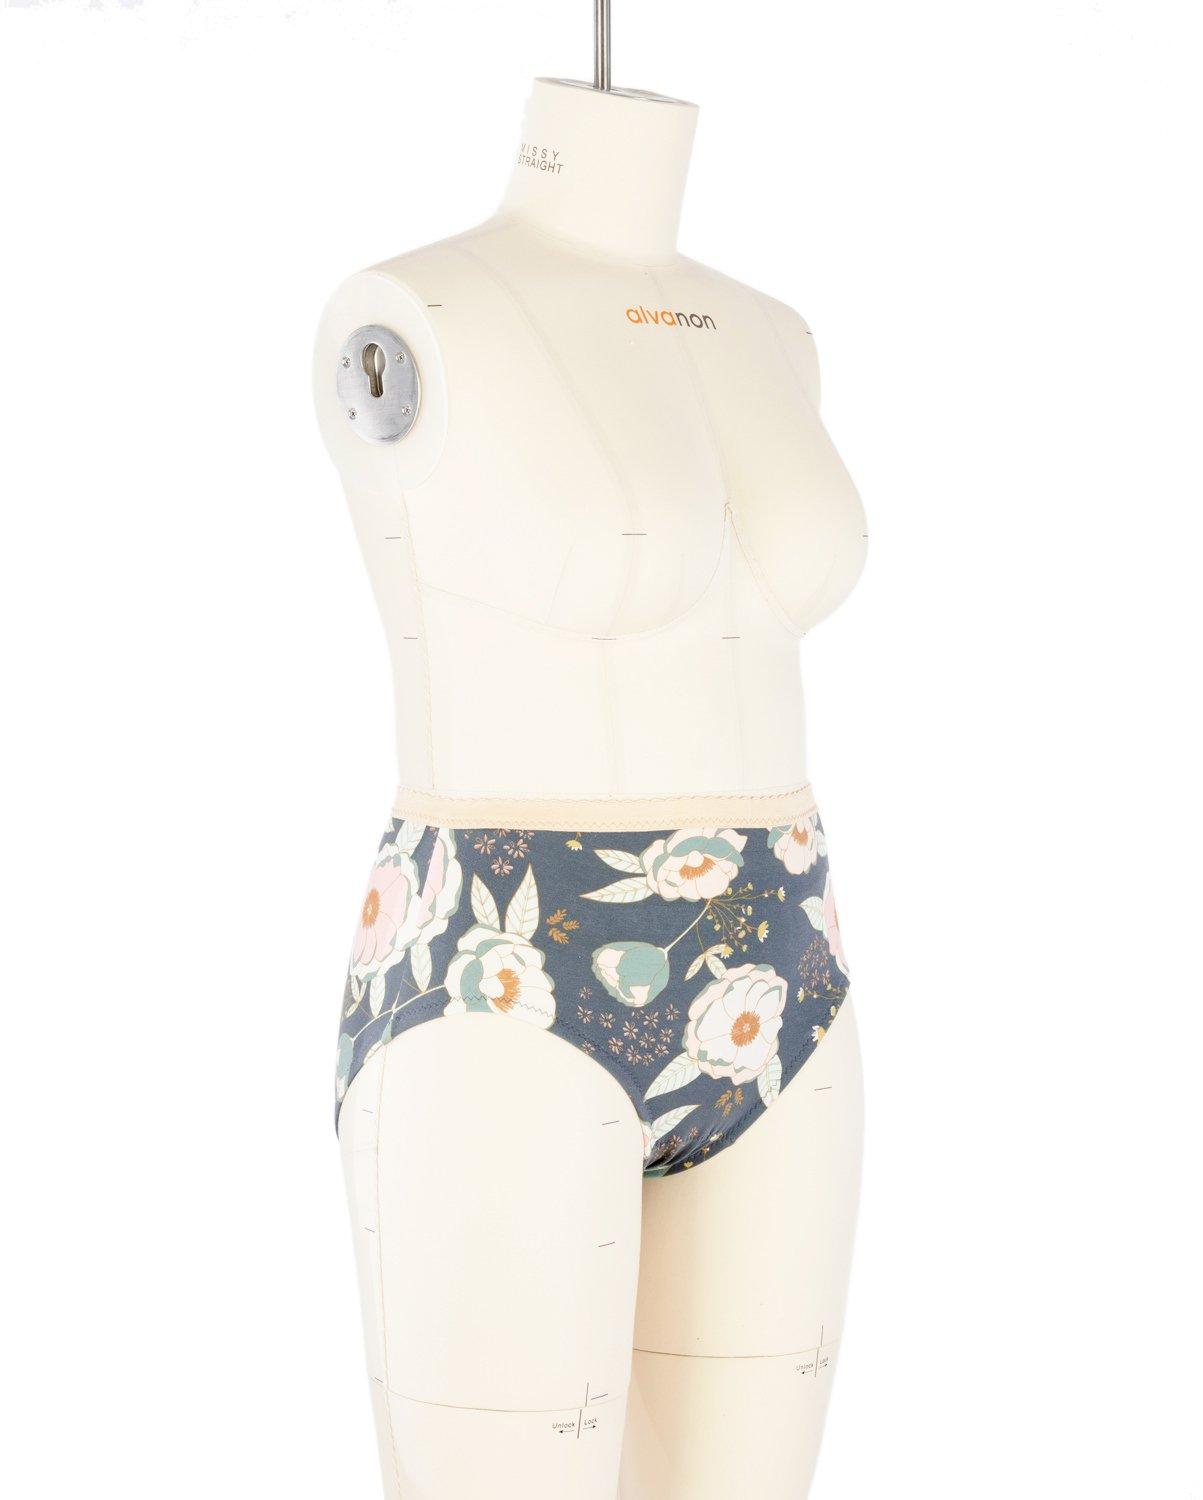 Sewing Pattern Jalie 3895 - MARIE-JOSÉE Ostomy Underwear